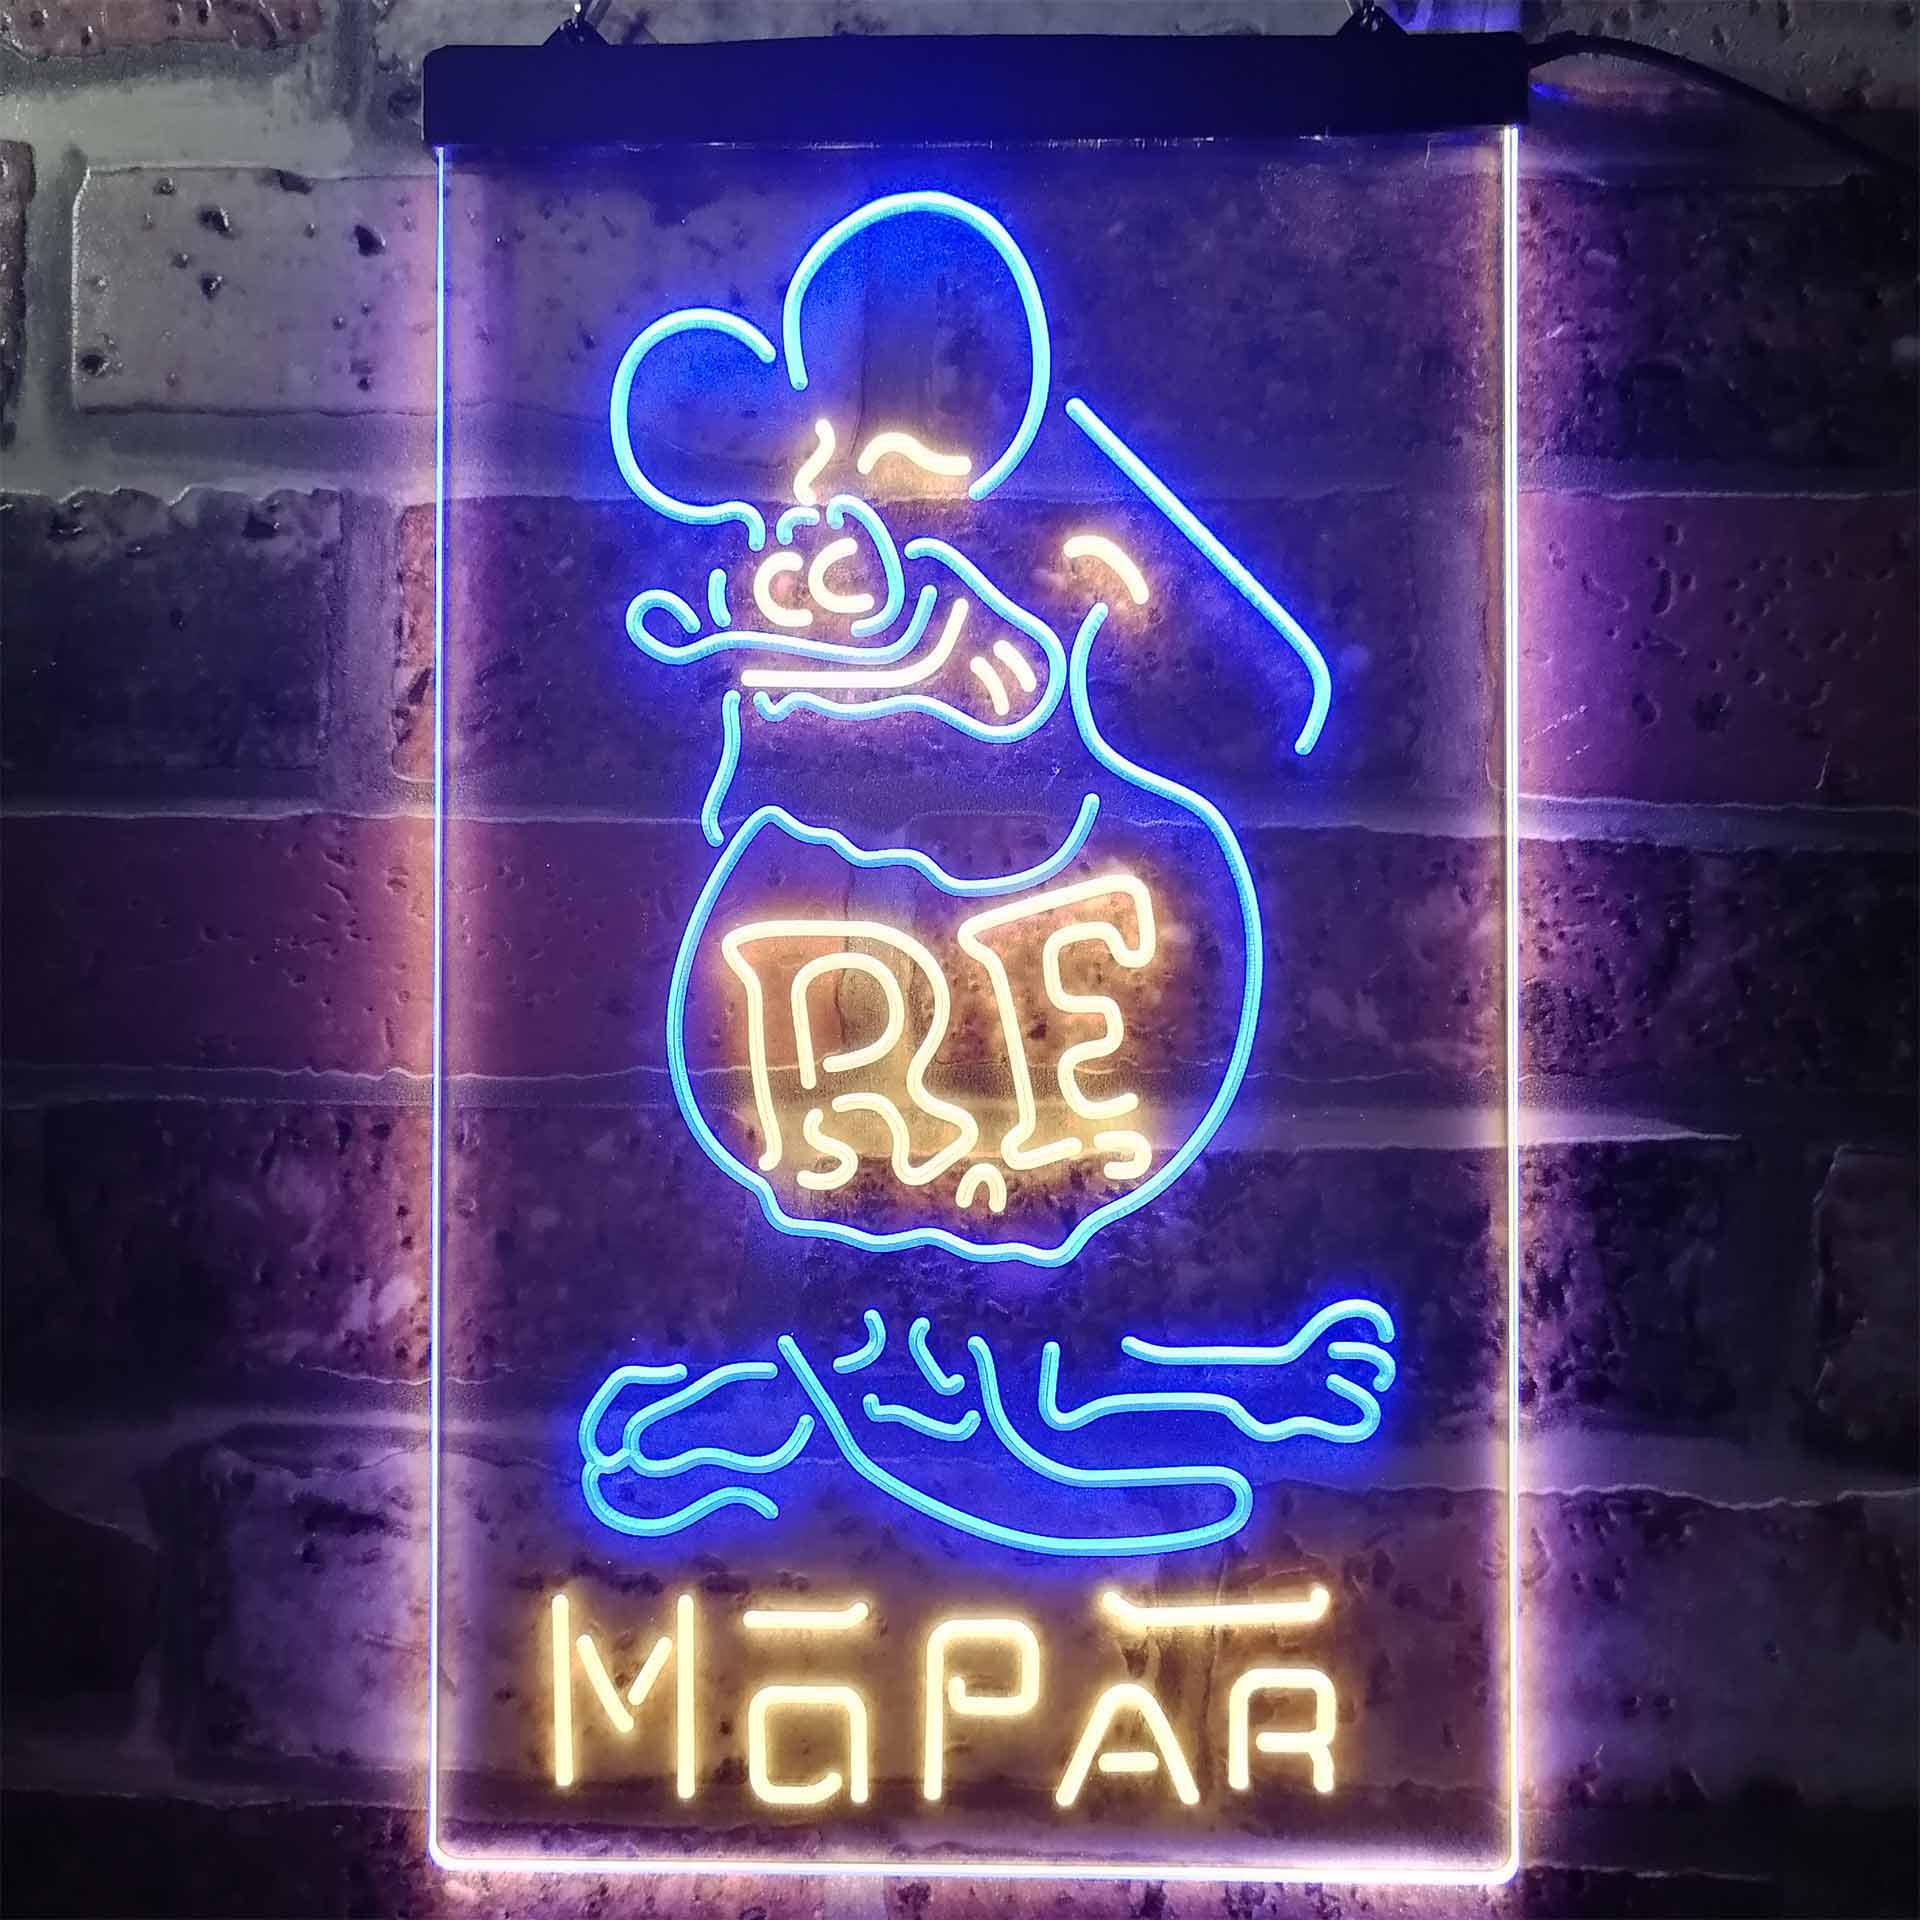 Rat Fink Retro RF Mopar Neon LED Sign